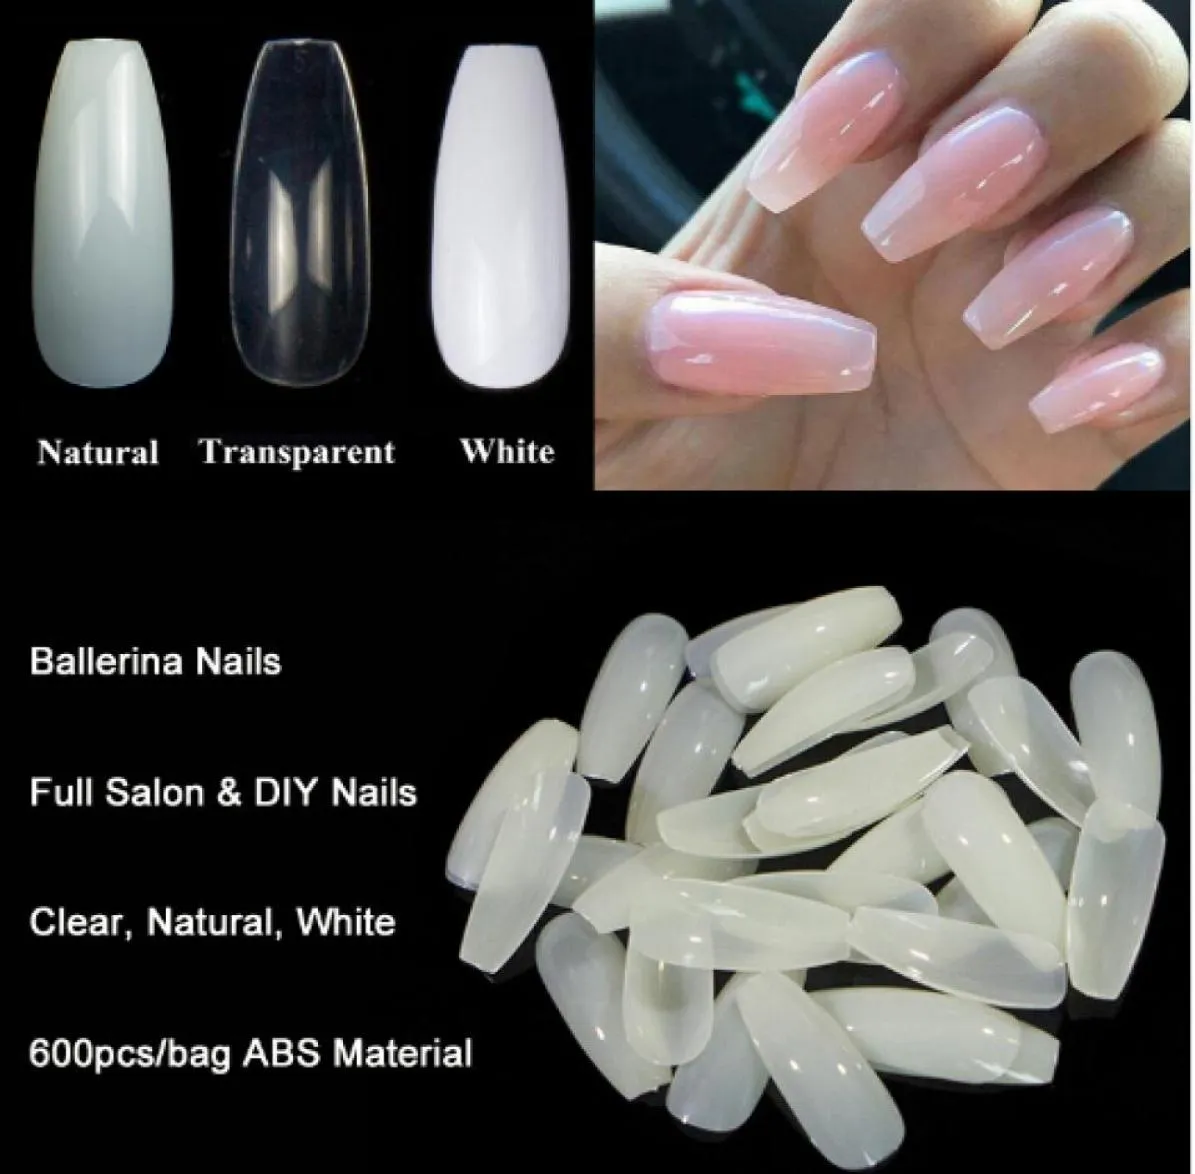 600pcsBag Ballerina Nail Art Tips TransparentNatural False Coffin Nails Art Tips Flat Shape Full Cover Manicure8870698